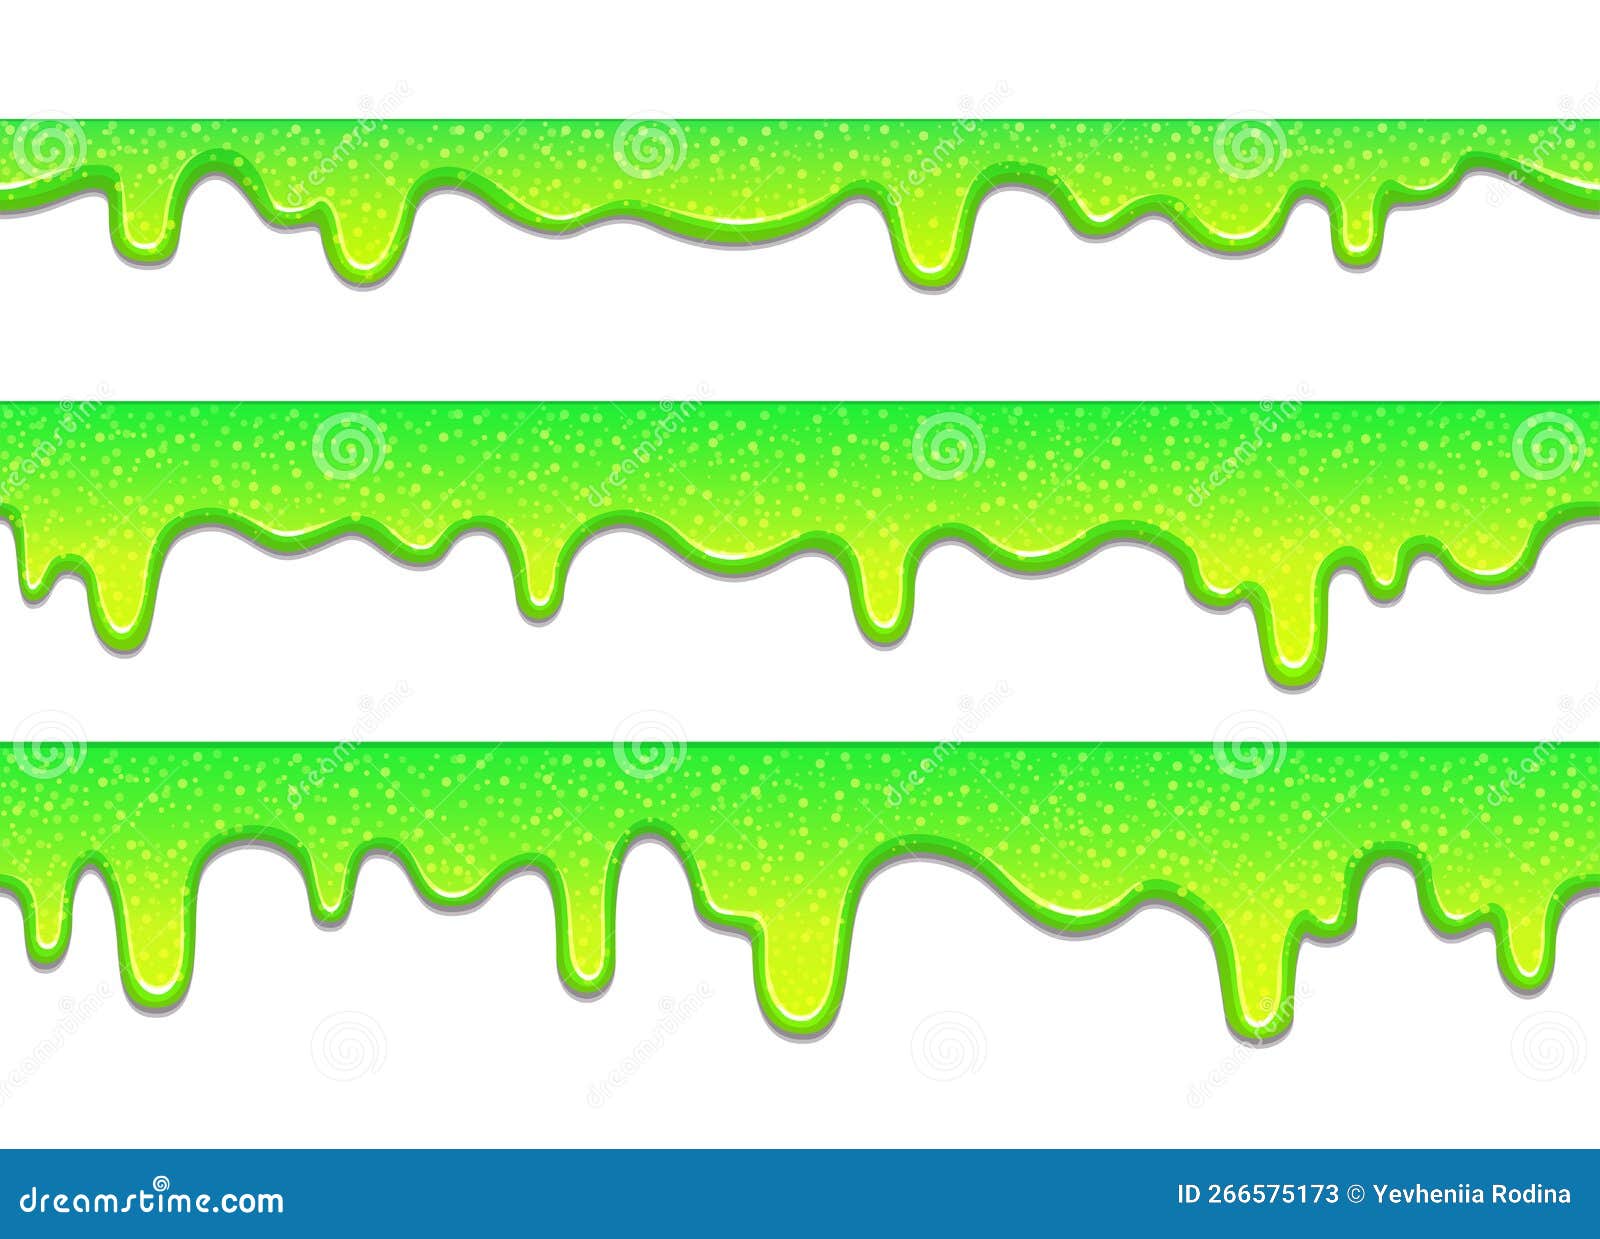 White Dripping Slime Seamless Element Stock Illustration